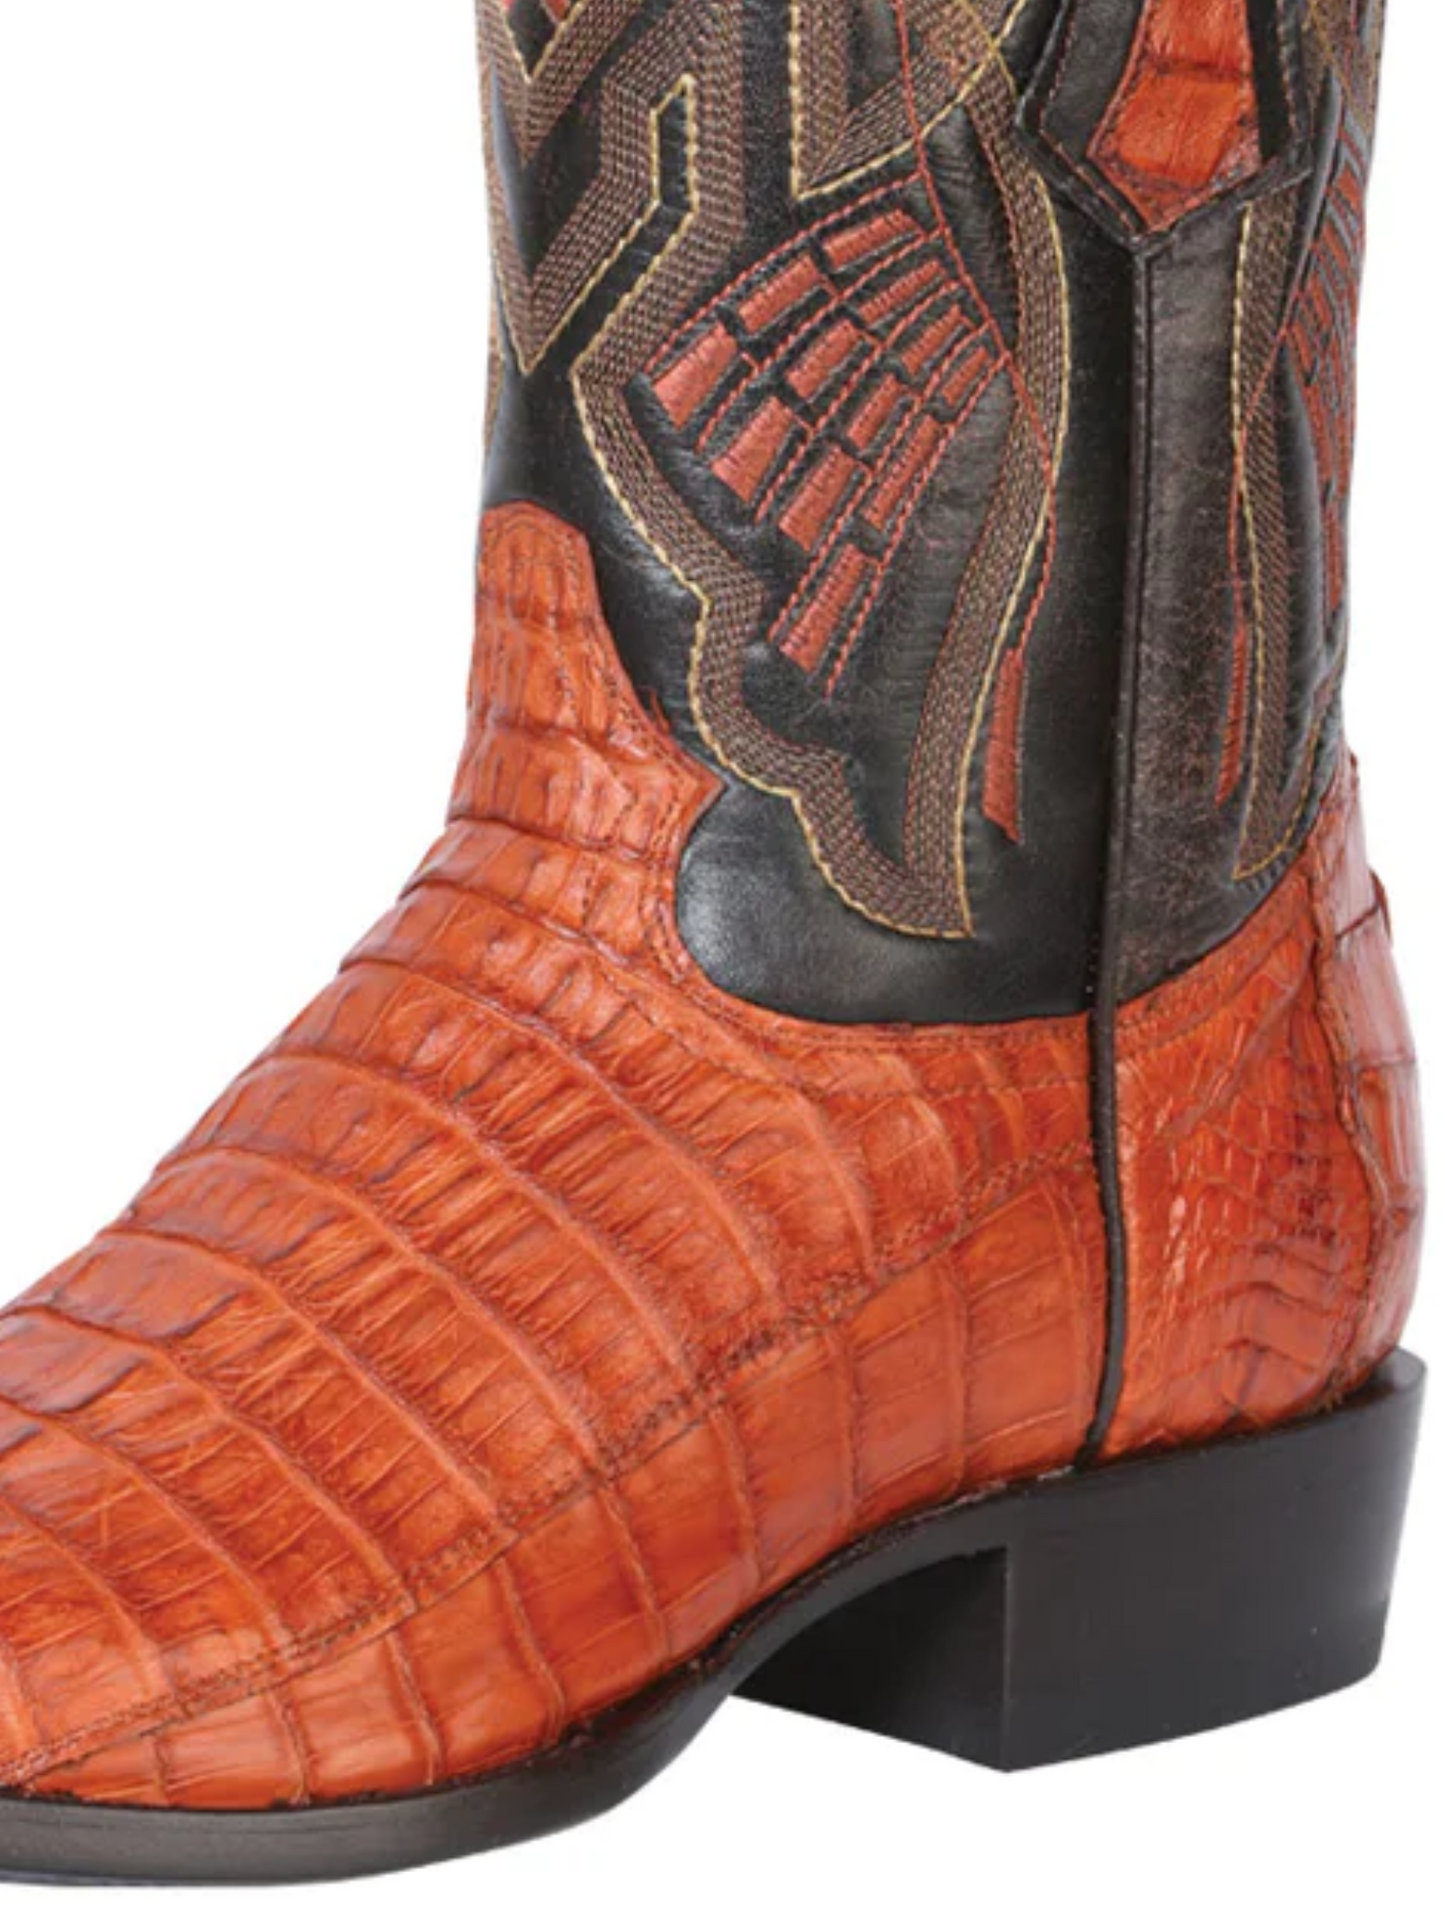 Botas Vaqueras Exoticas de Caiman Cola Original para Hombre 'Centenario' - ID: 124463 Cowboy Boots Centenario 